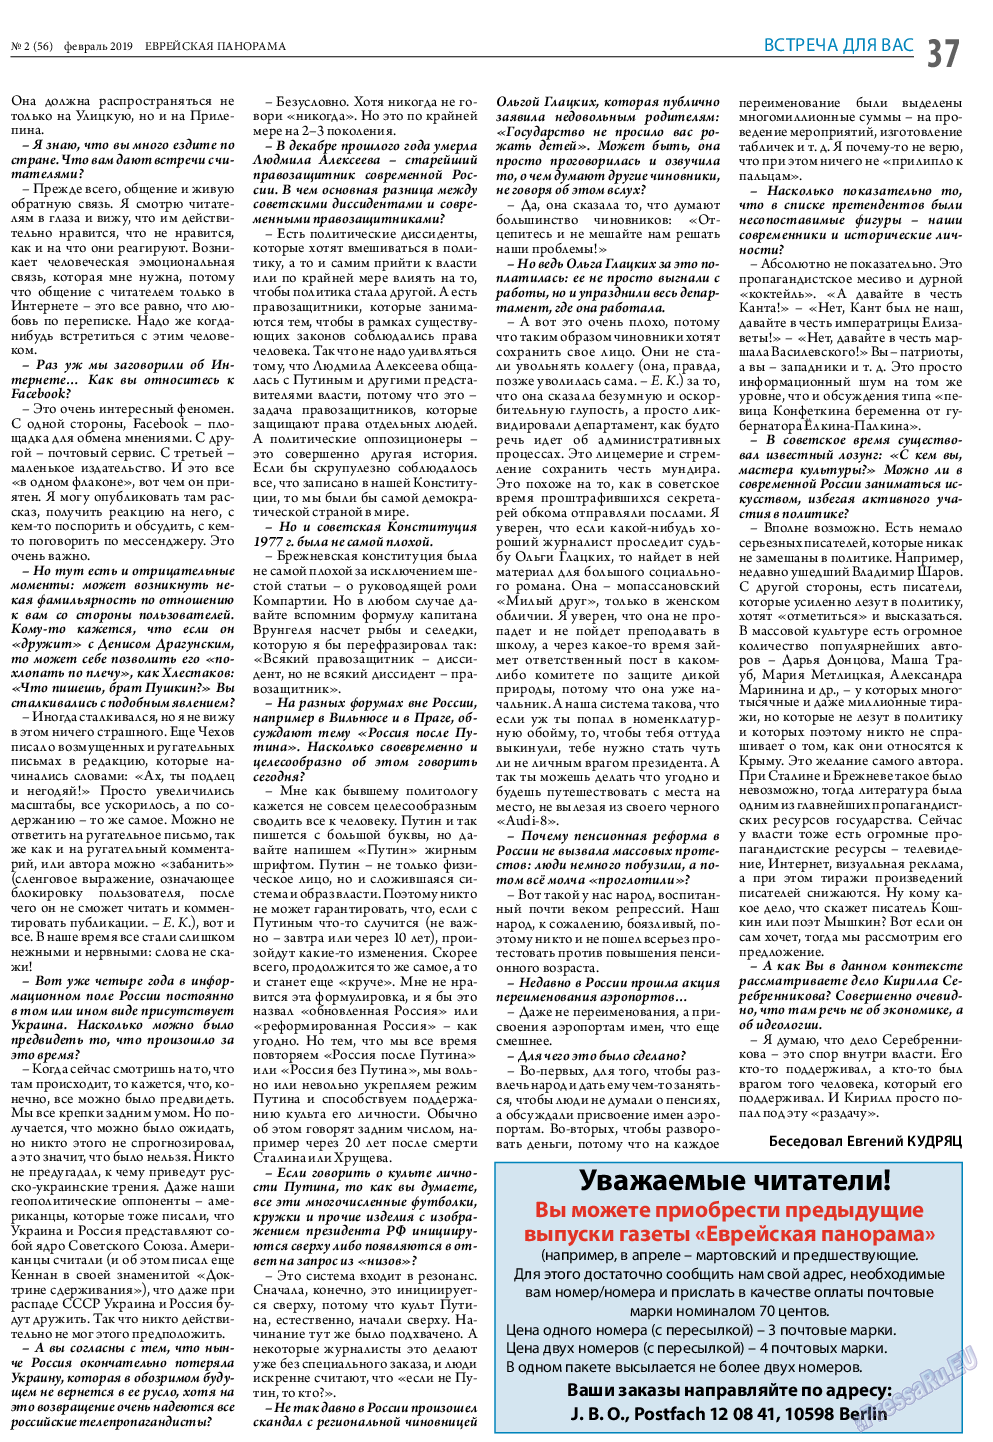 Еврейская панорама, газета. 2019 №2 стр.37